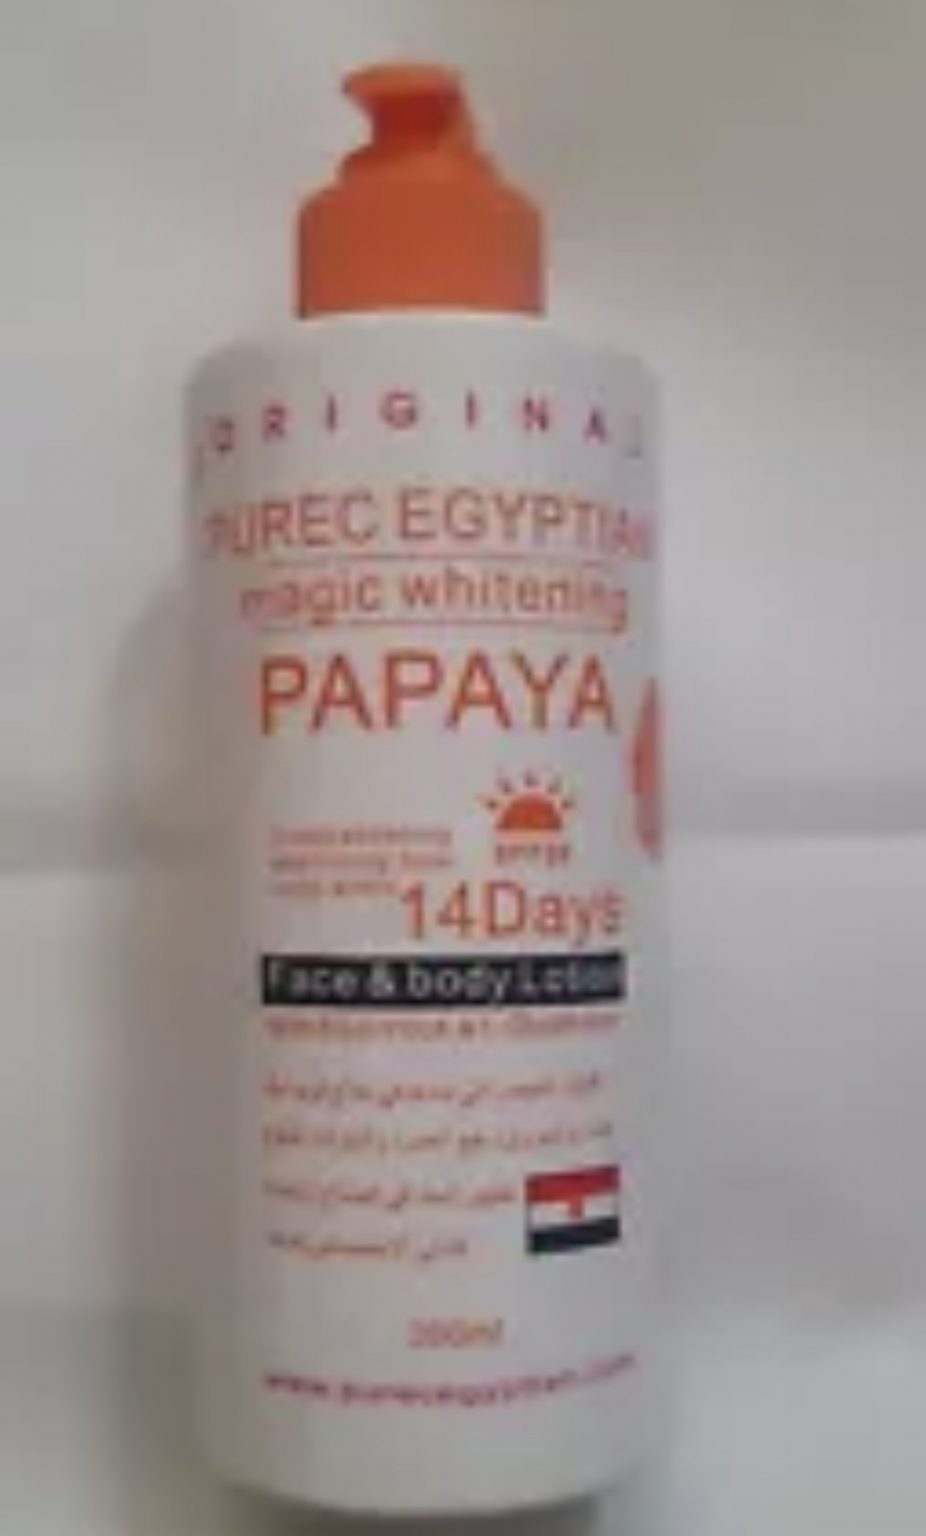 PUREC EGYPTIAN PAPAYA MAGIC WHITENING LOTION 14 DAYS FACE AND BODY